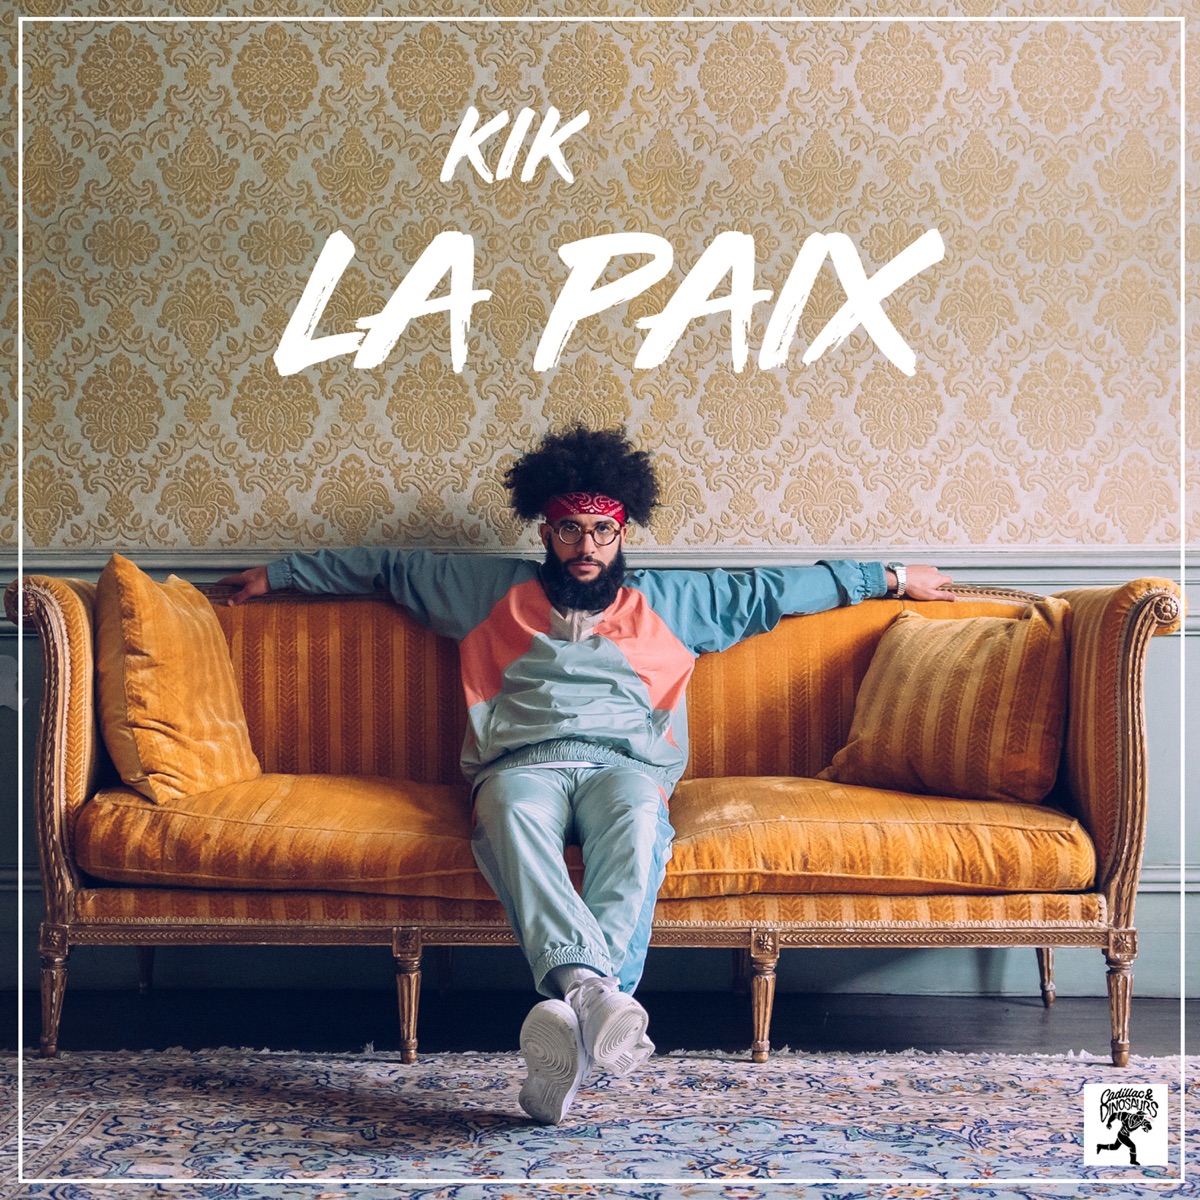 La paix - Single - Album by KIK - Apple Music